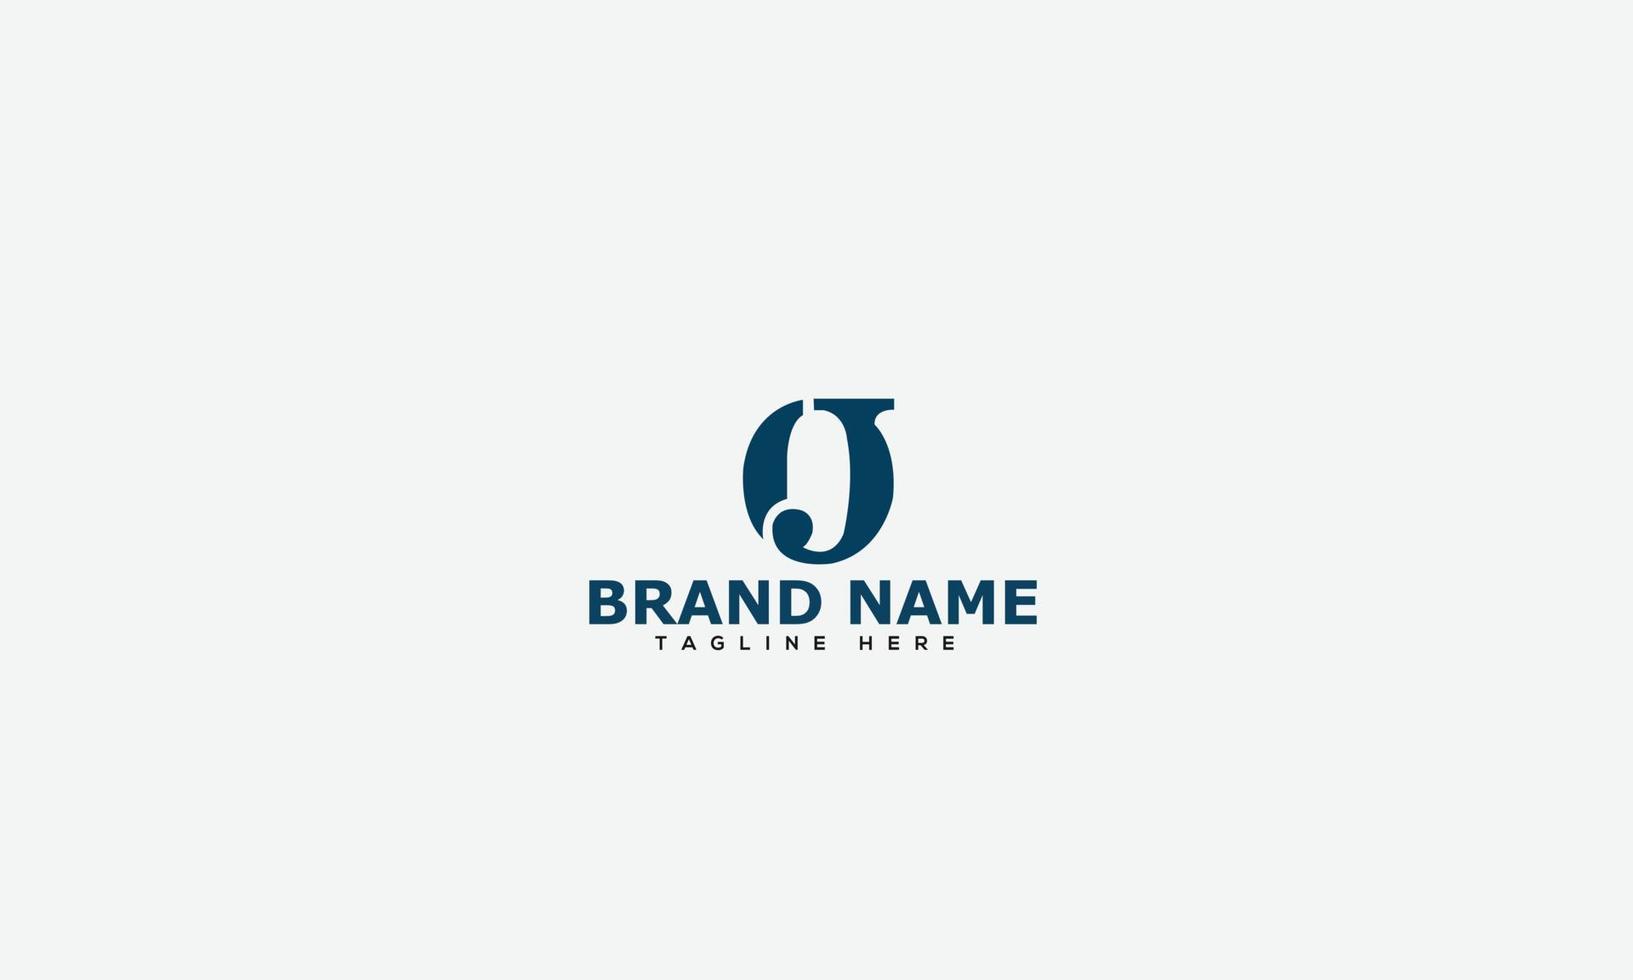 JO Logo Design Template Vector Graphic Branding Element.